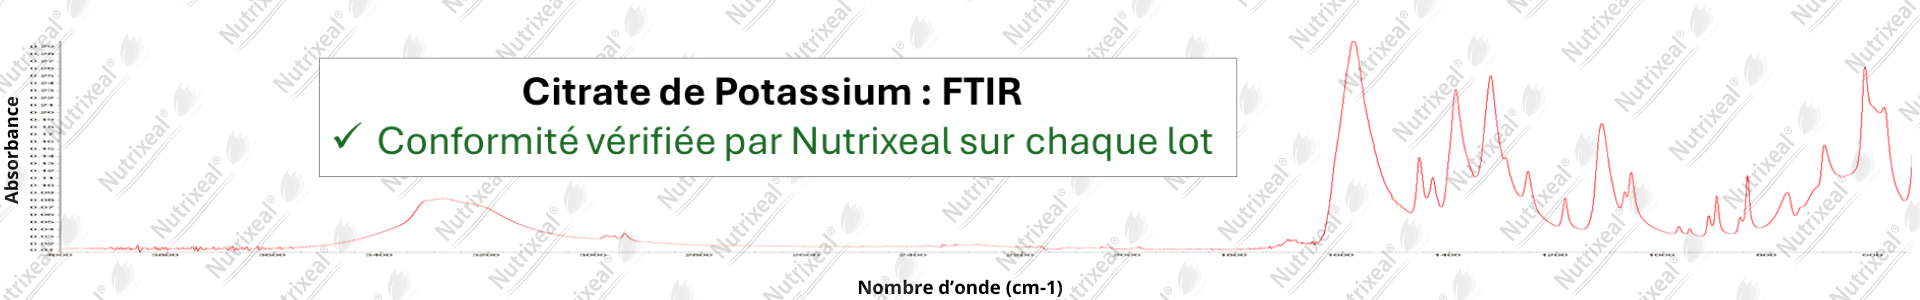 Spectre FTIR du Citrate de Potassium